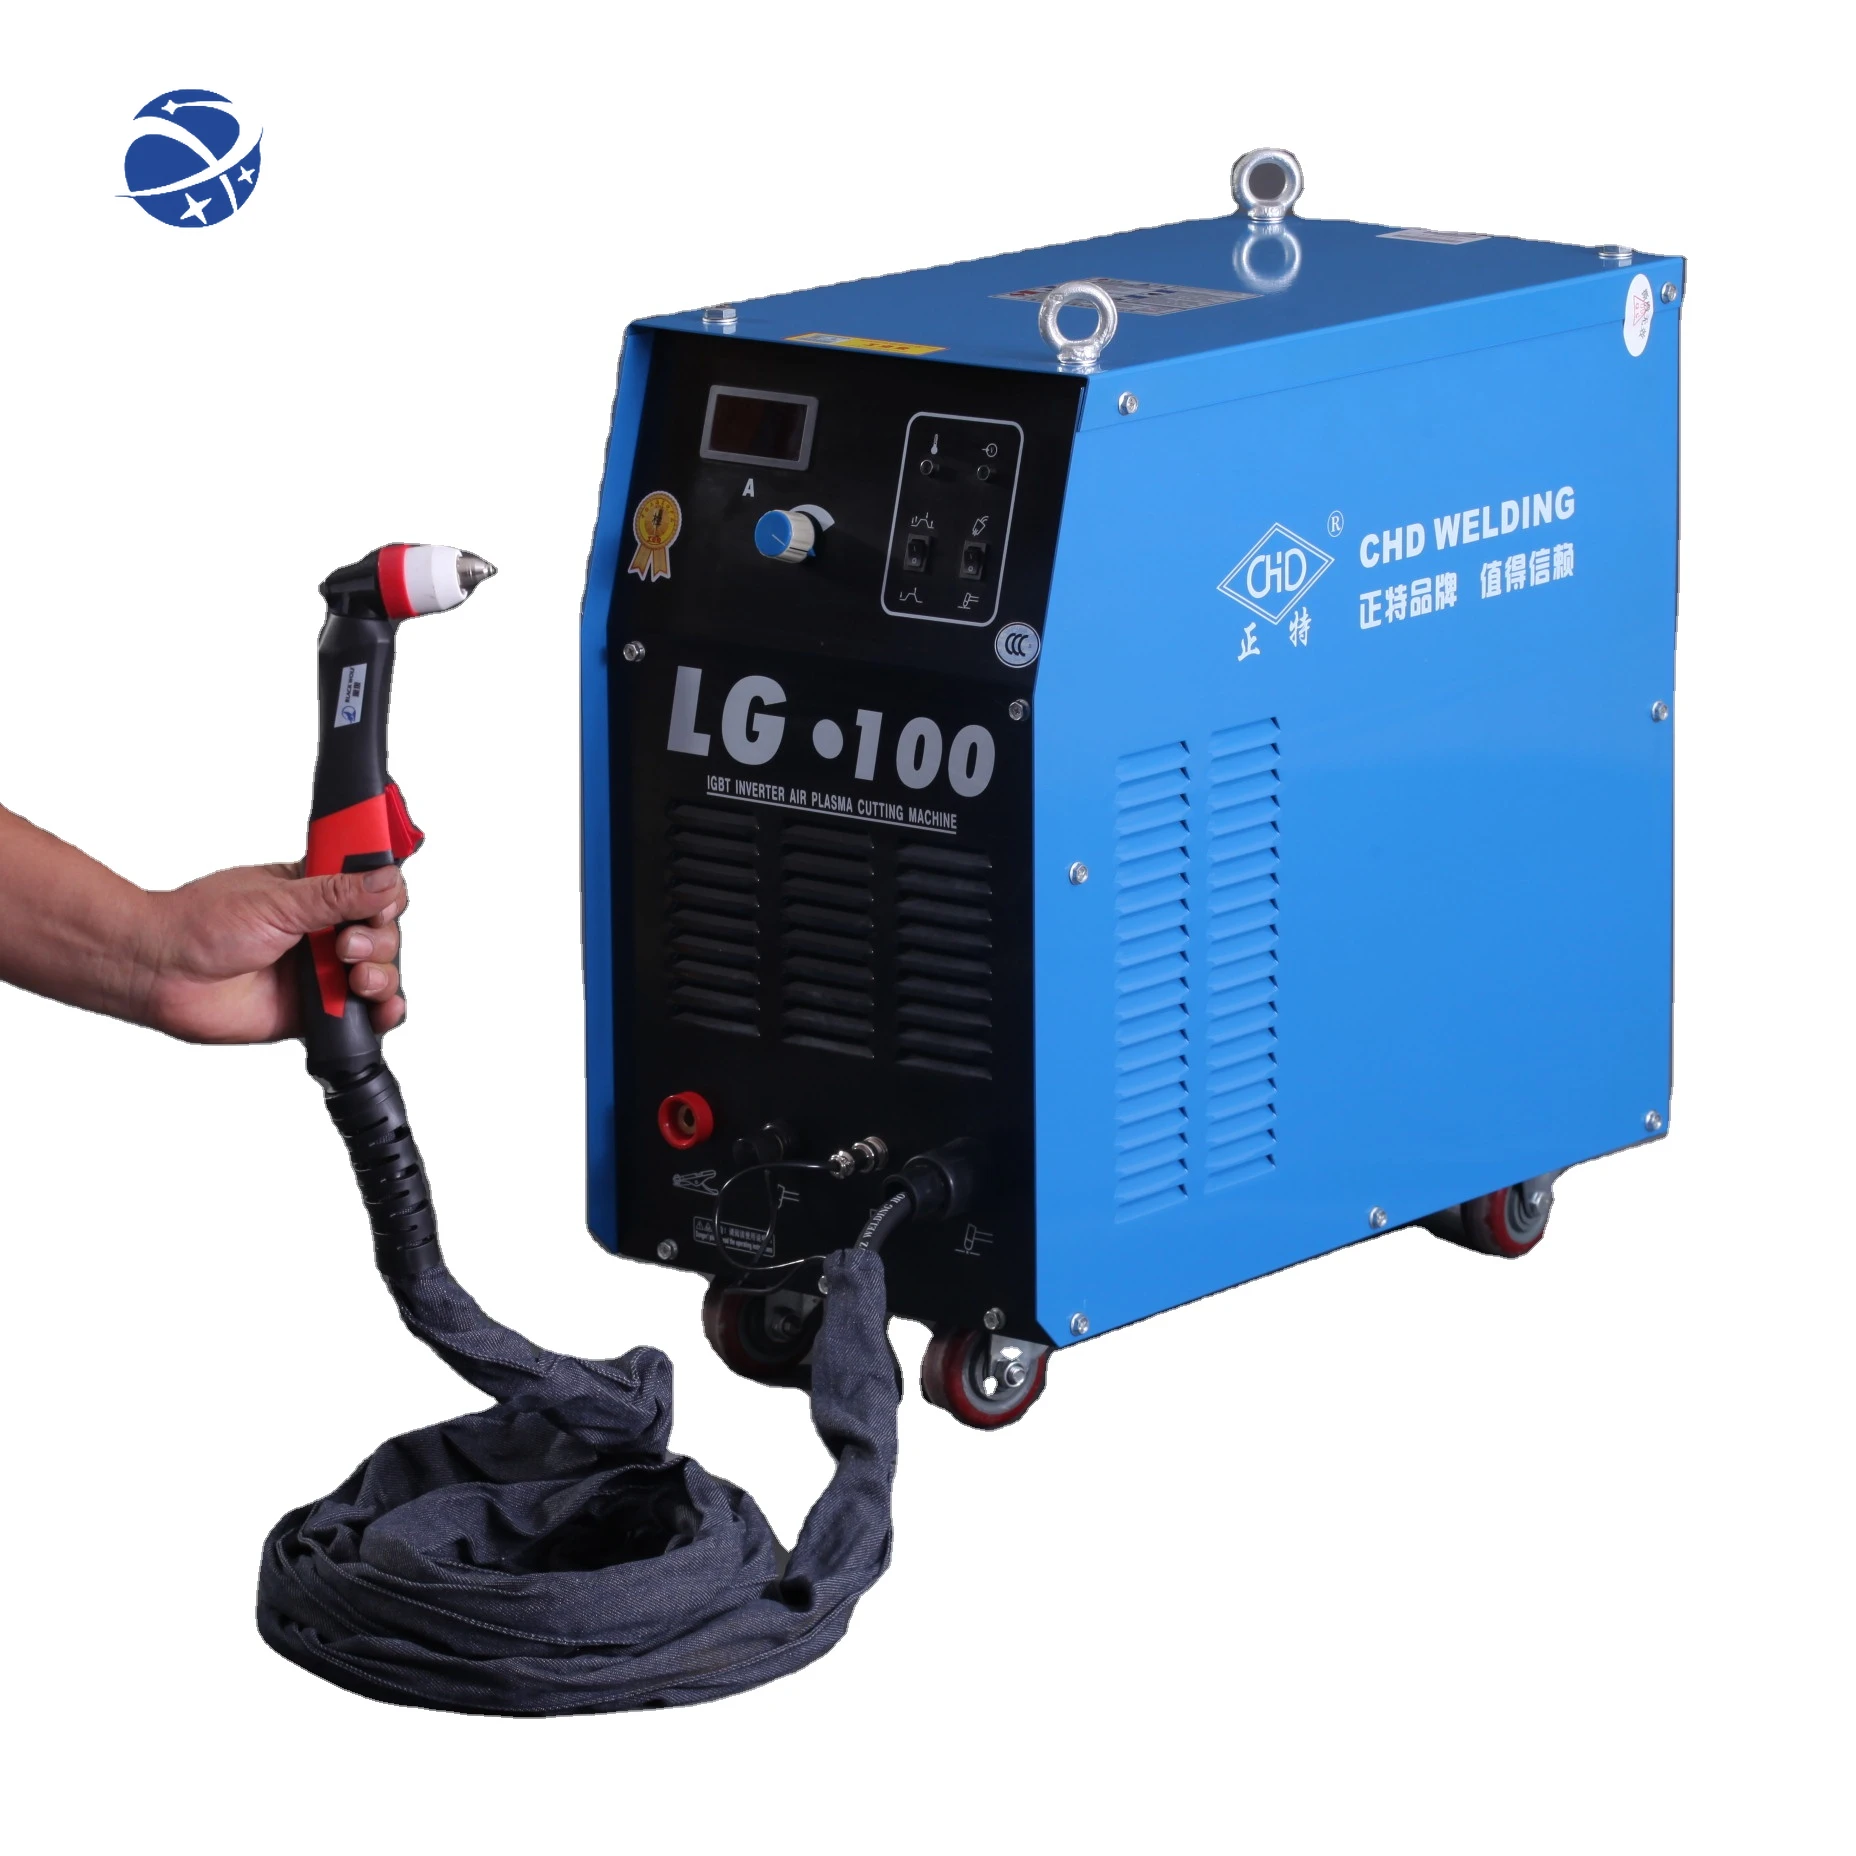 

YYHC-portable double module industrial plasma power source plasma cutting machine plasma cutter LG-100 for cnc metal cutting